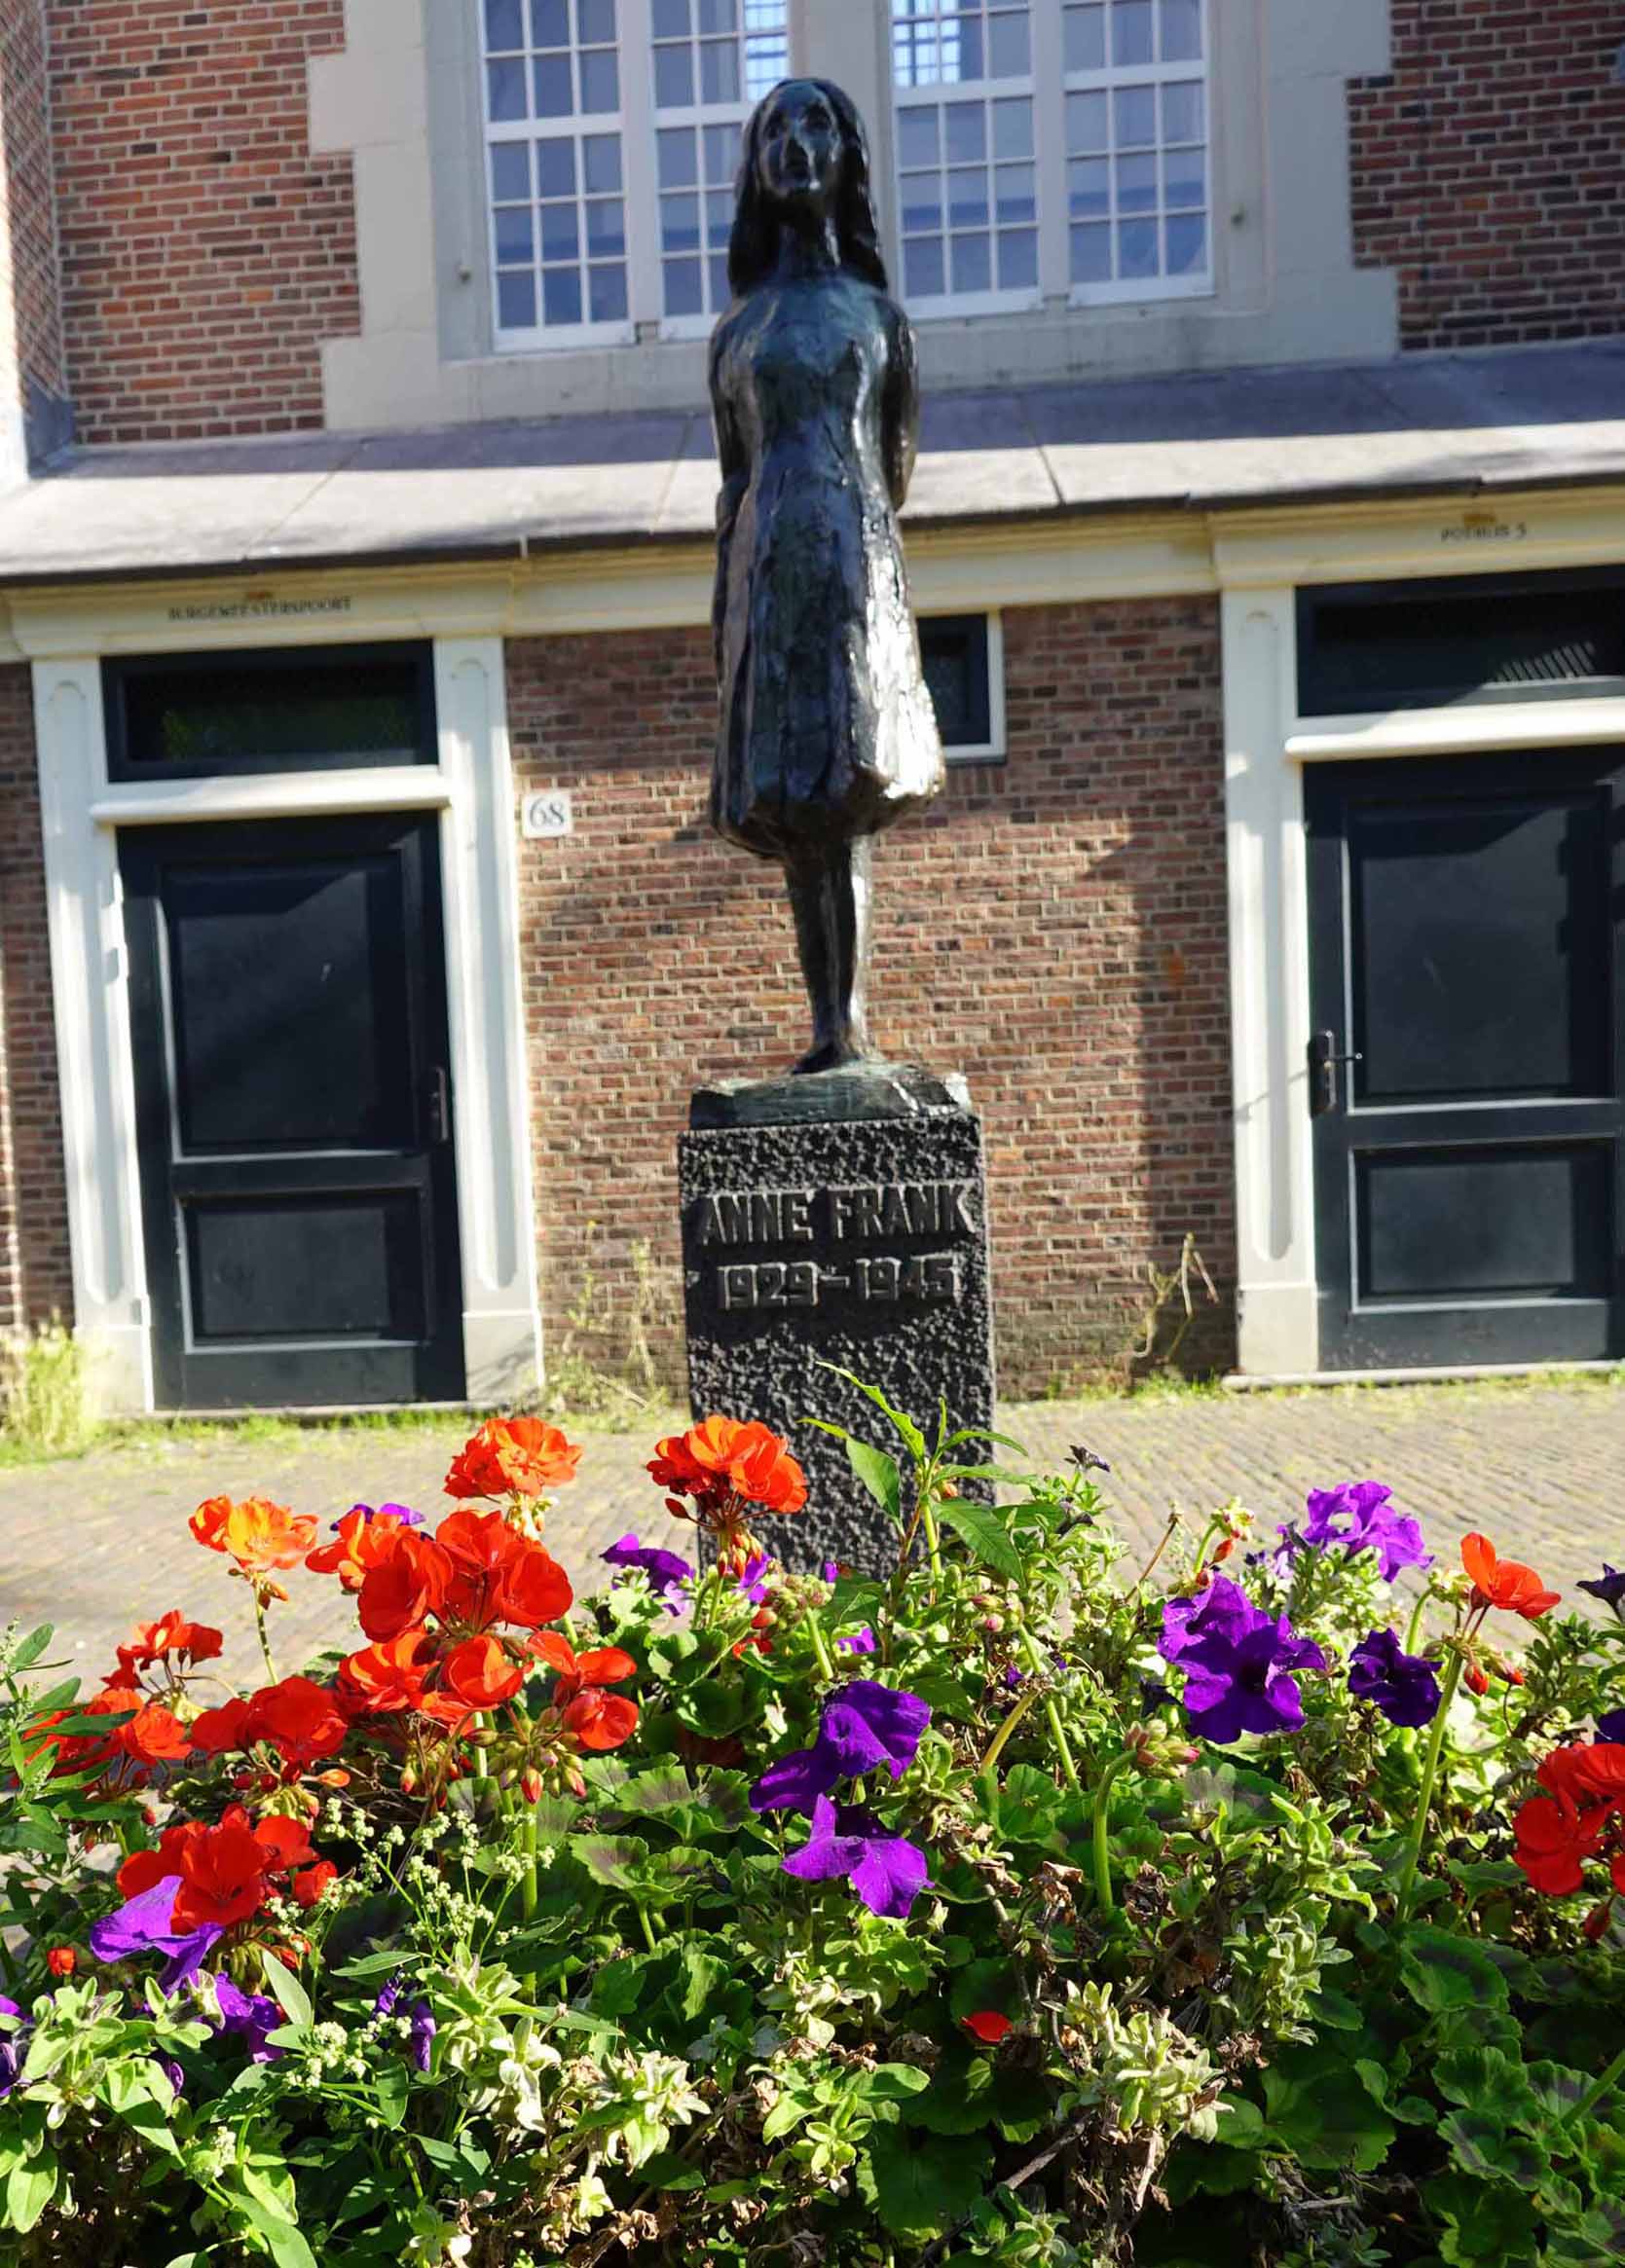 Anne Frank Memorial Statue in Amsterdam, Netherlands